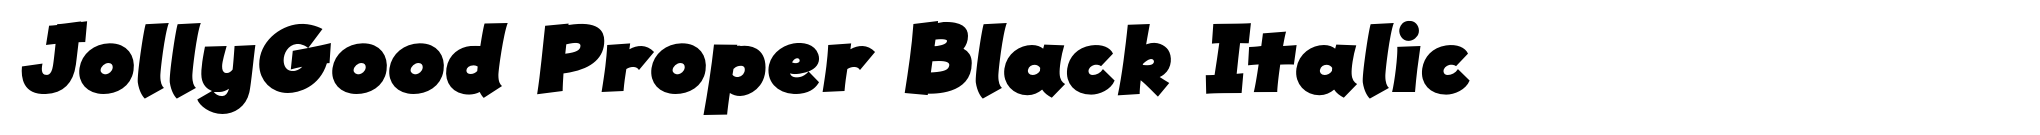 JollyGood Proper Black Italic image